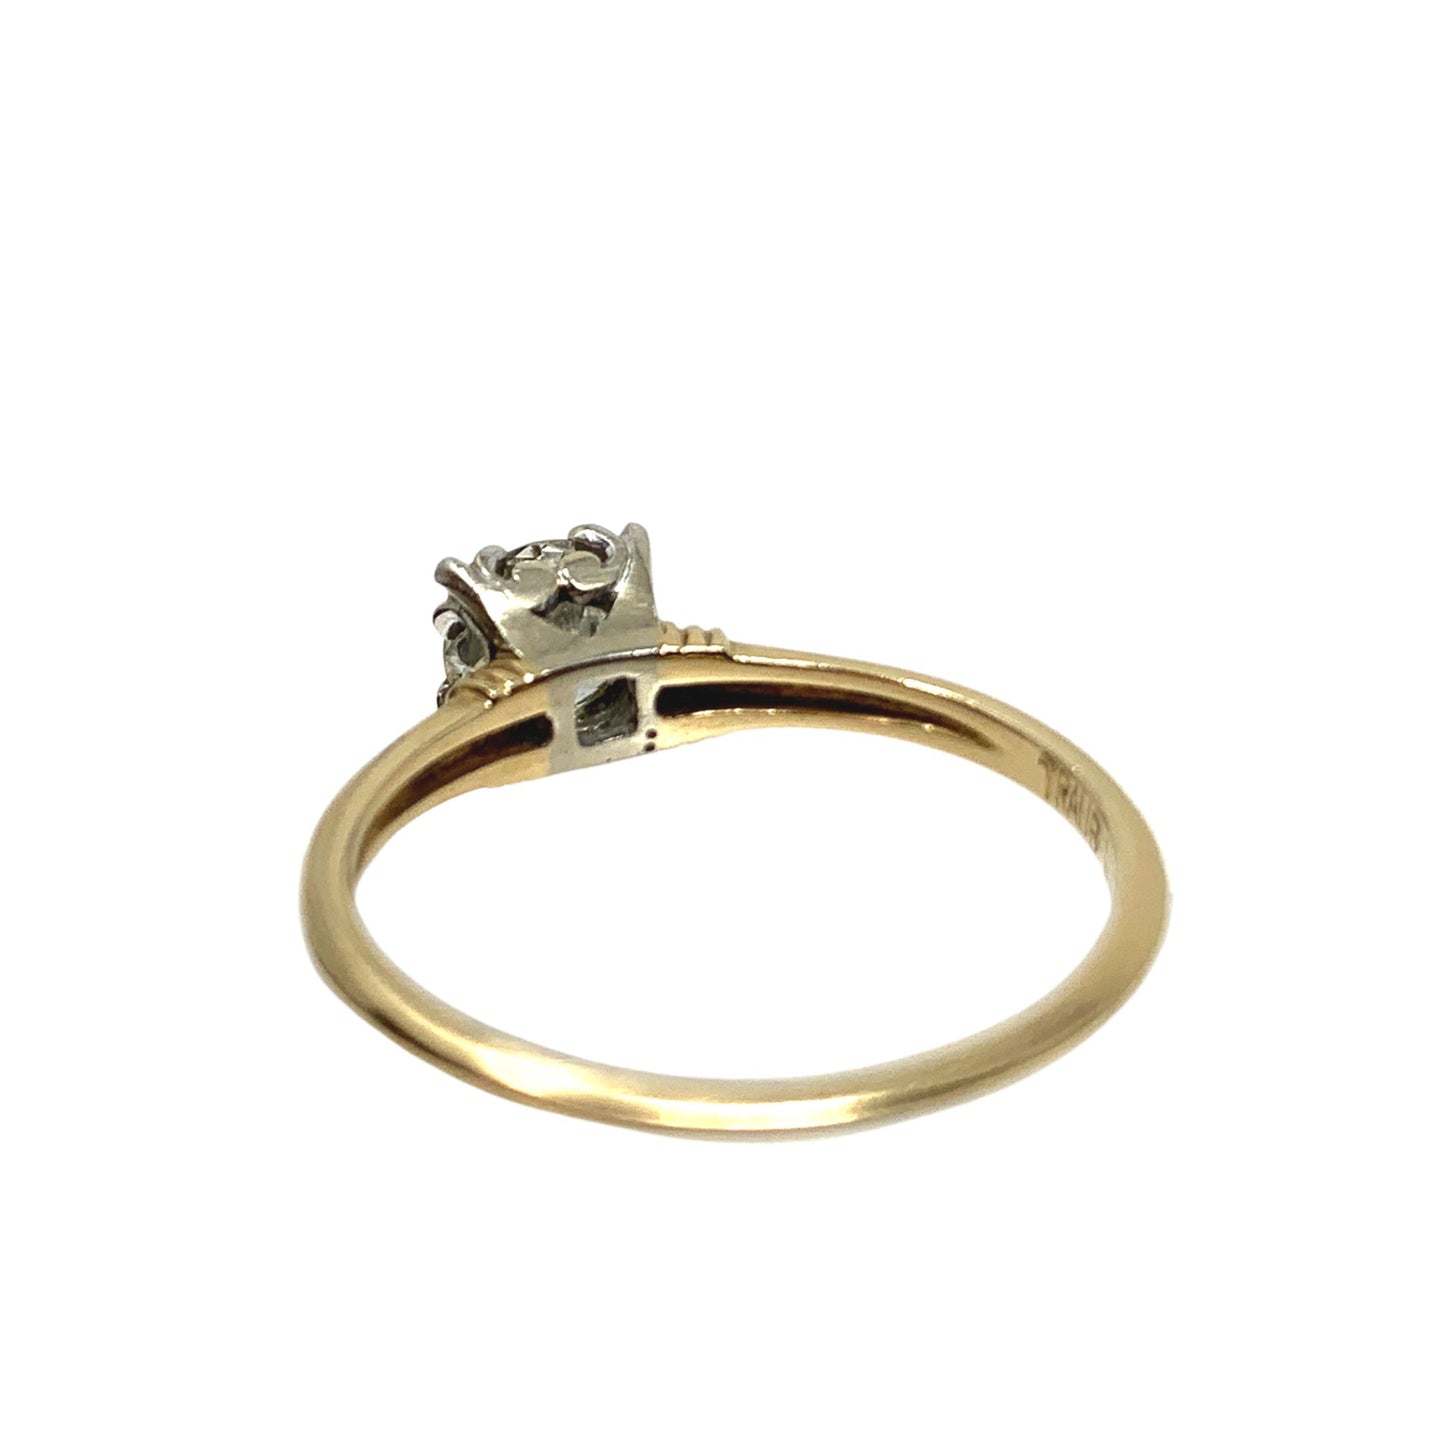 14K Gold "Orange Blossom" Diamond Ring by Traub